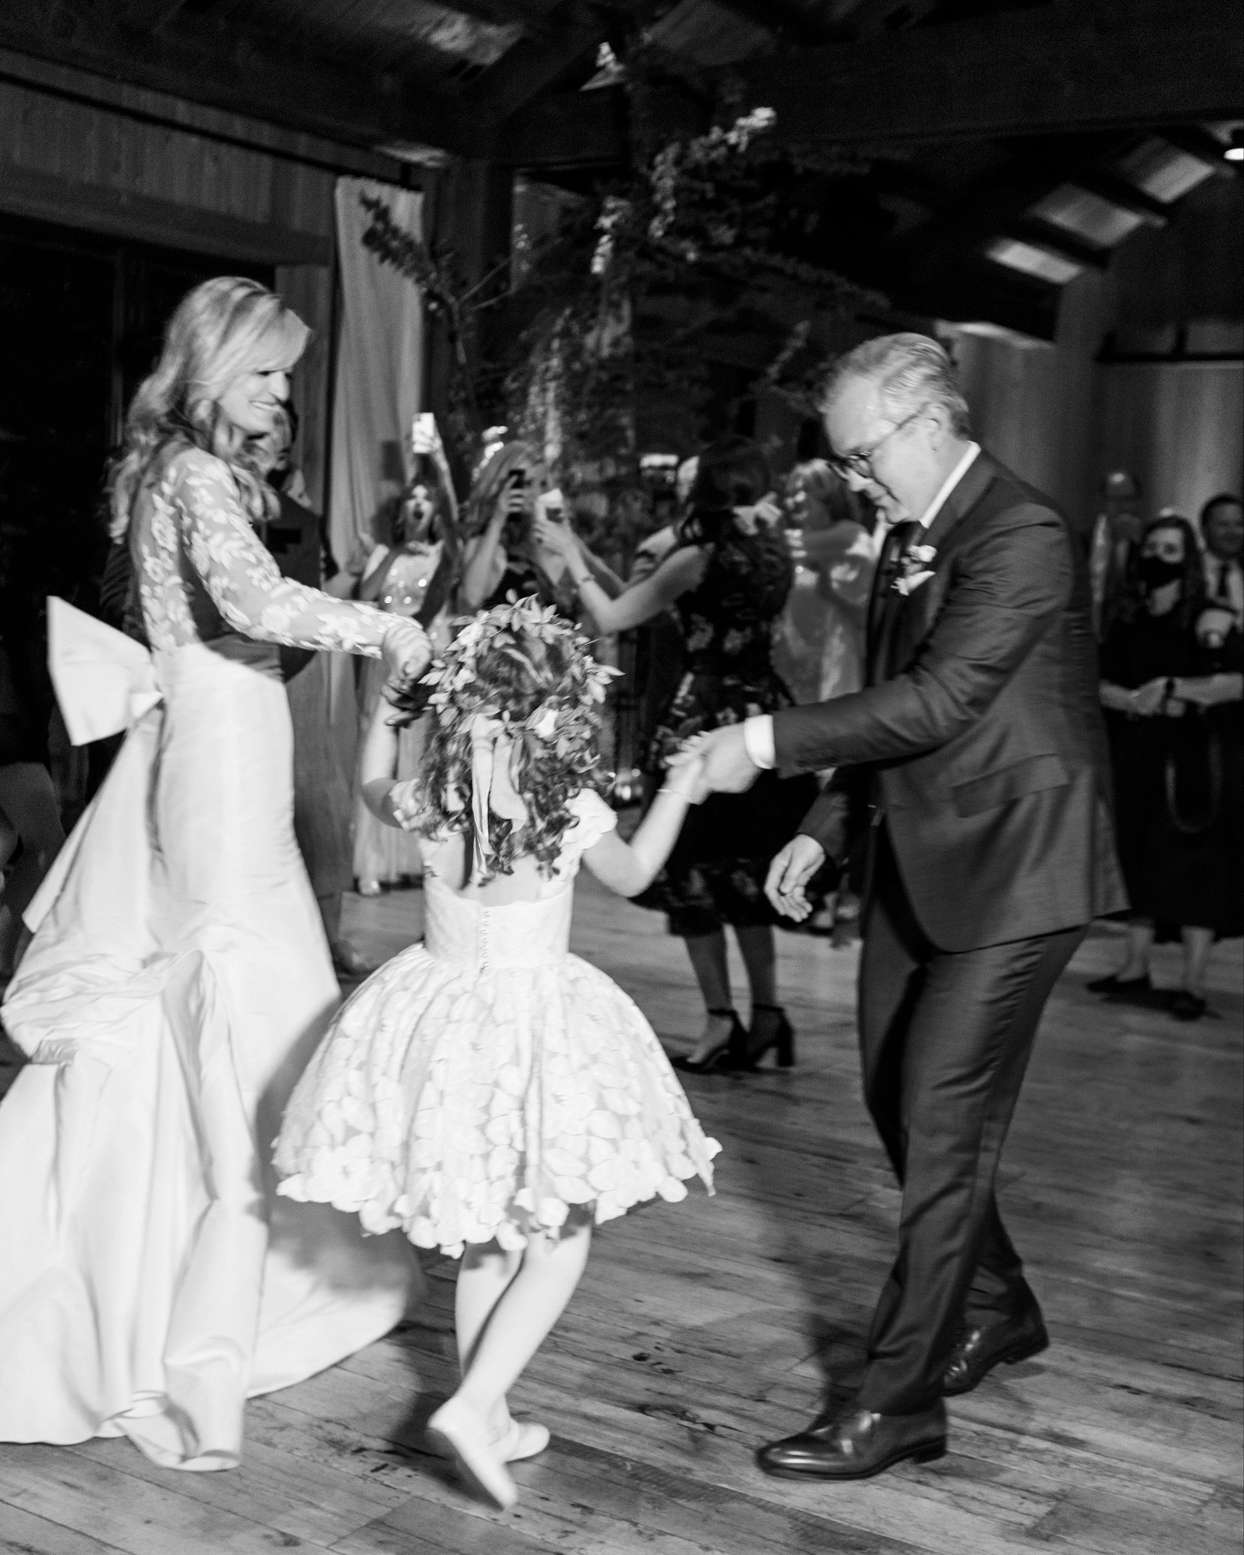 family dancing at wedding reception